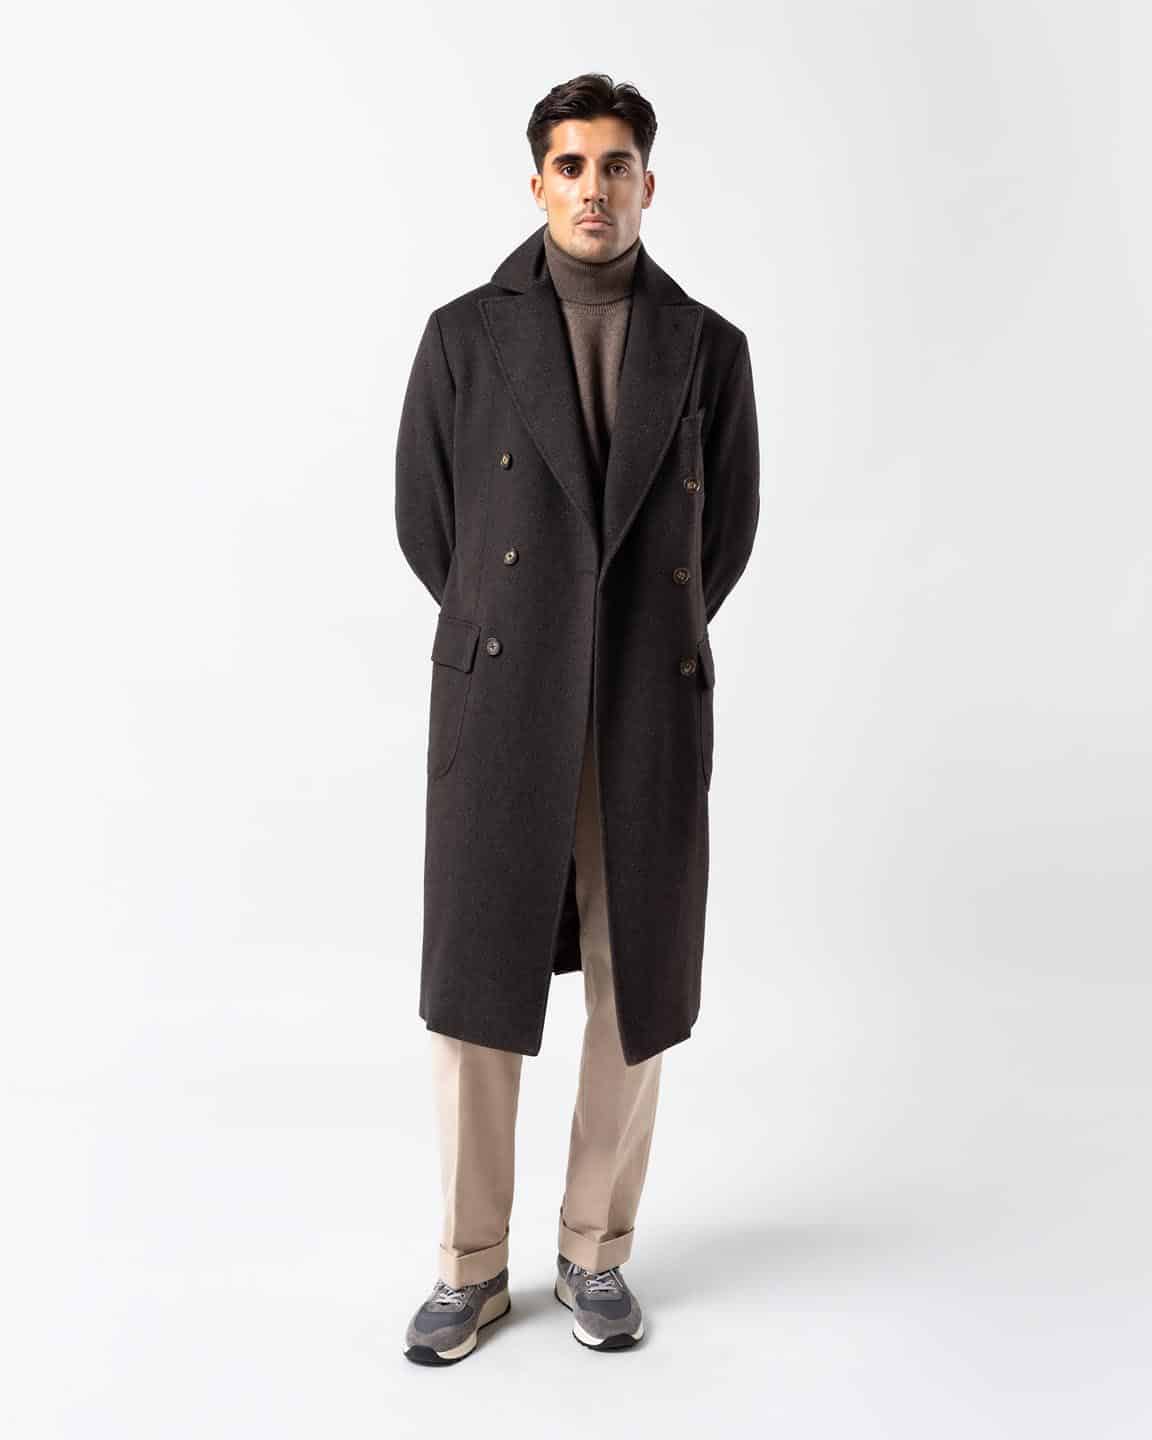 Overcoat wool dark brown image 1